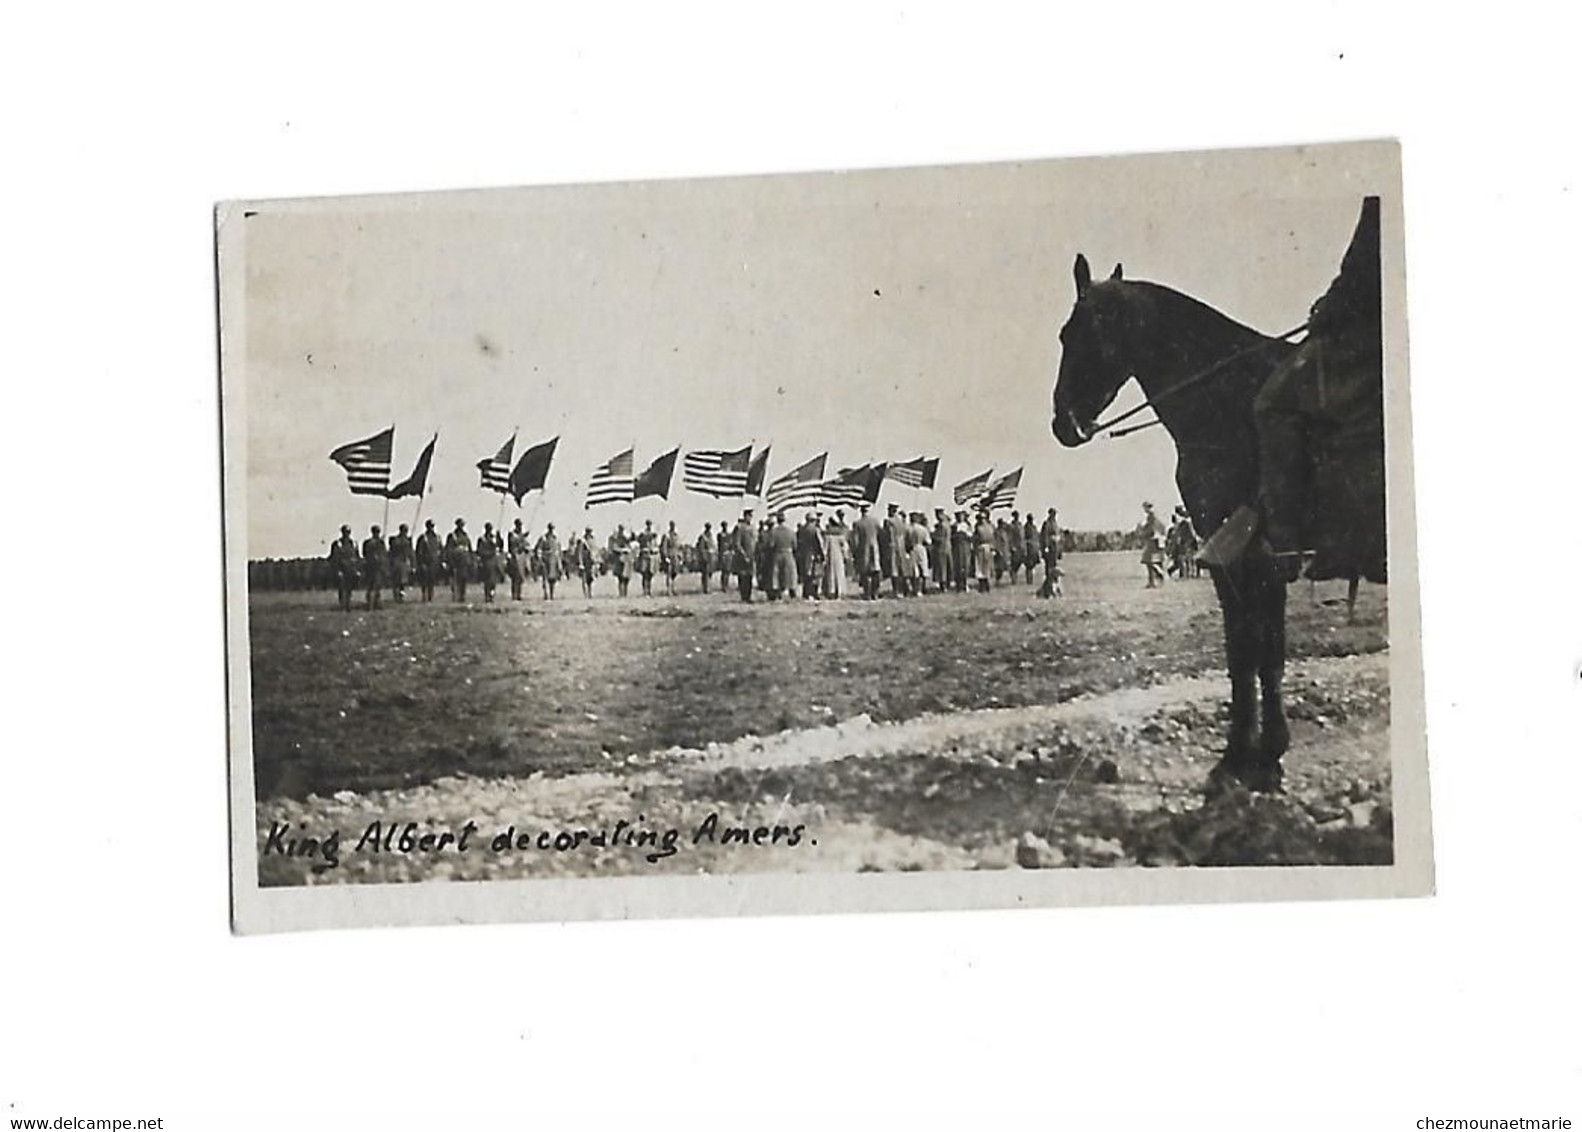 KING ALBERT DECORATING AMERS - PHOTO 6.5*4 CM - Guerra, Militares